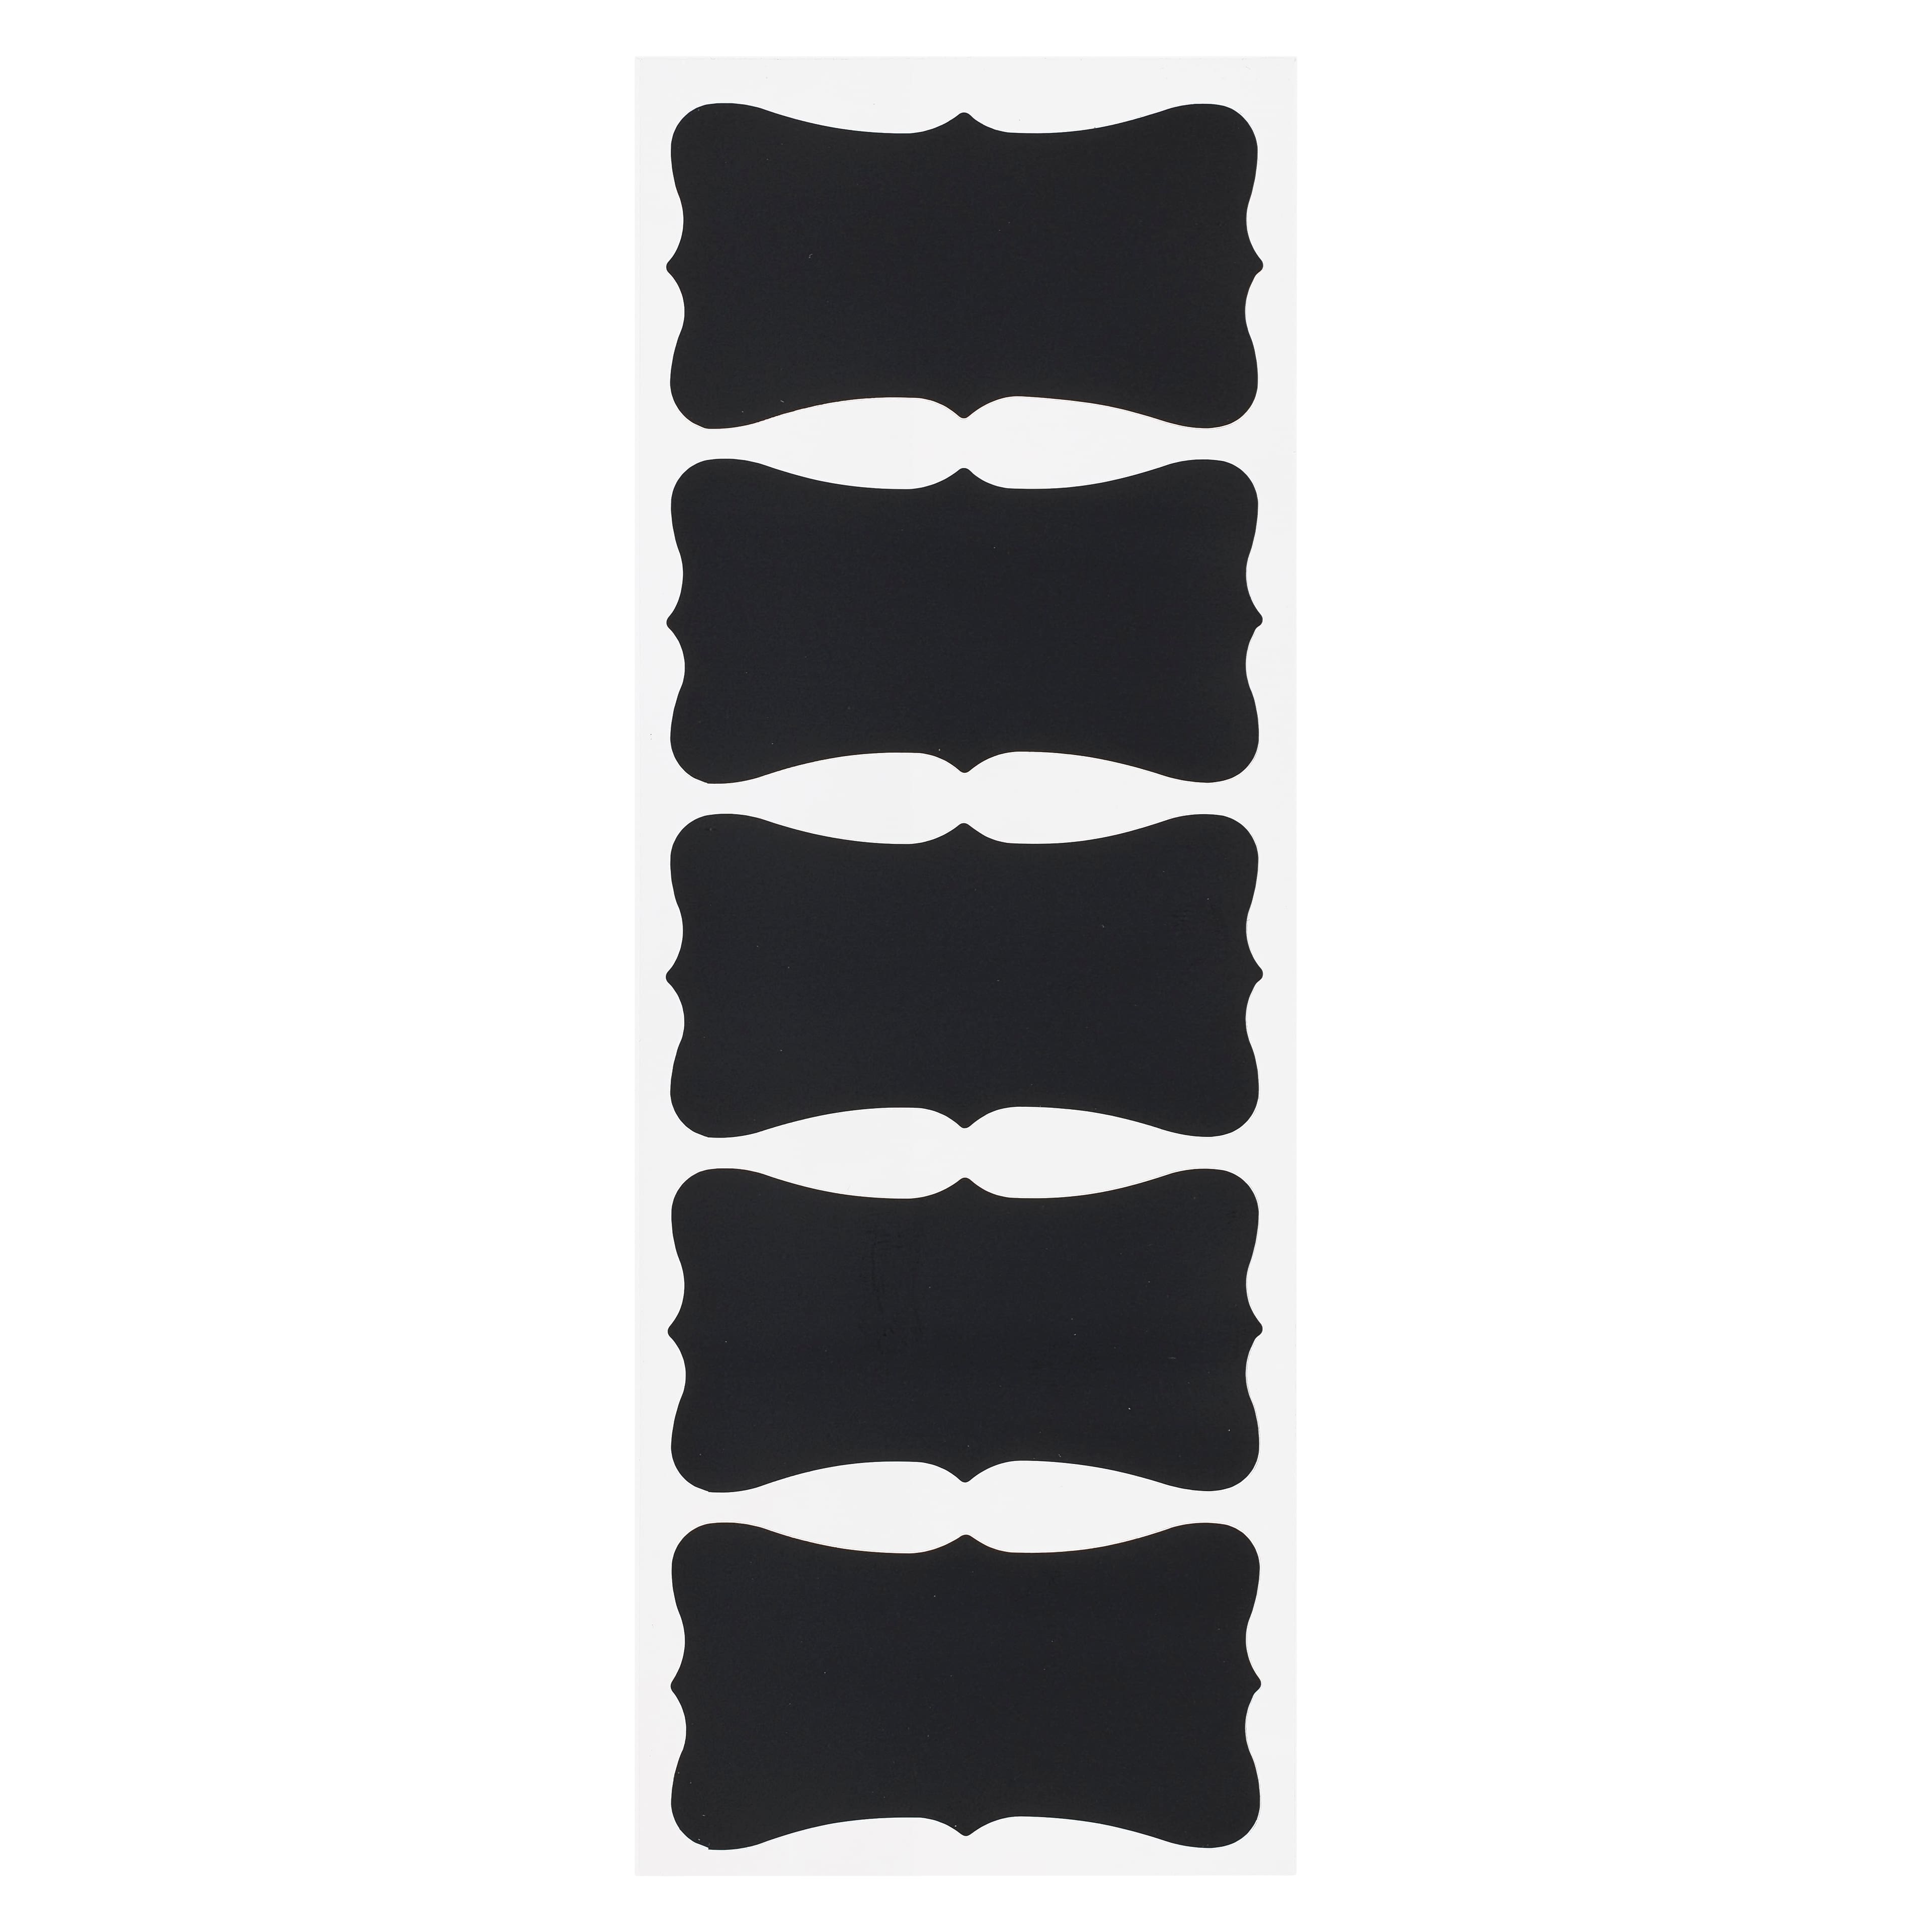 Chalkboard Labels – 64 Pack (Large Rectangle) – Crafty Croc